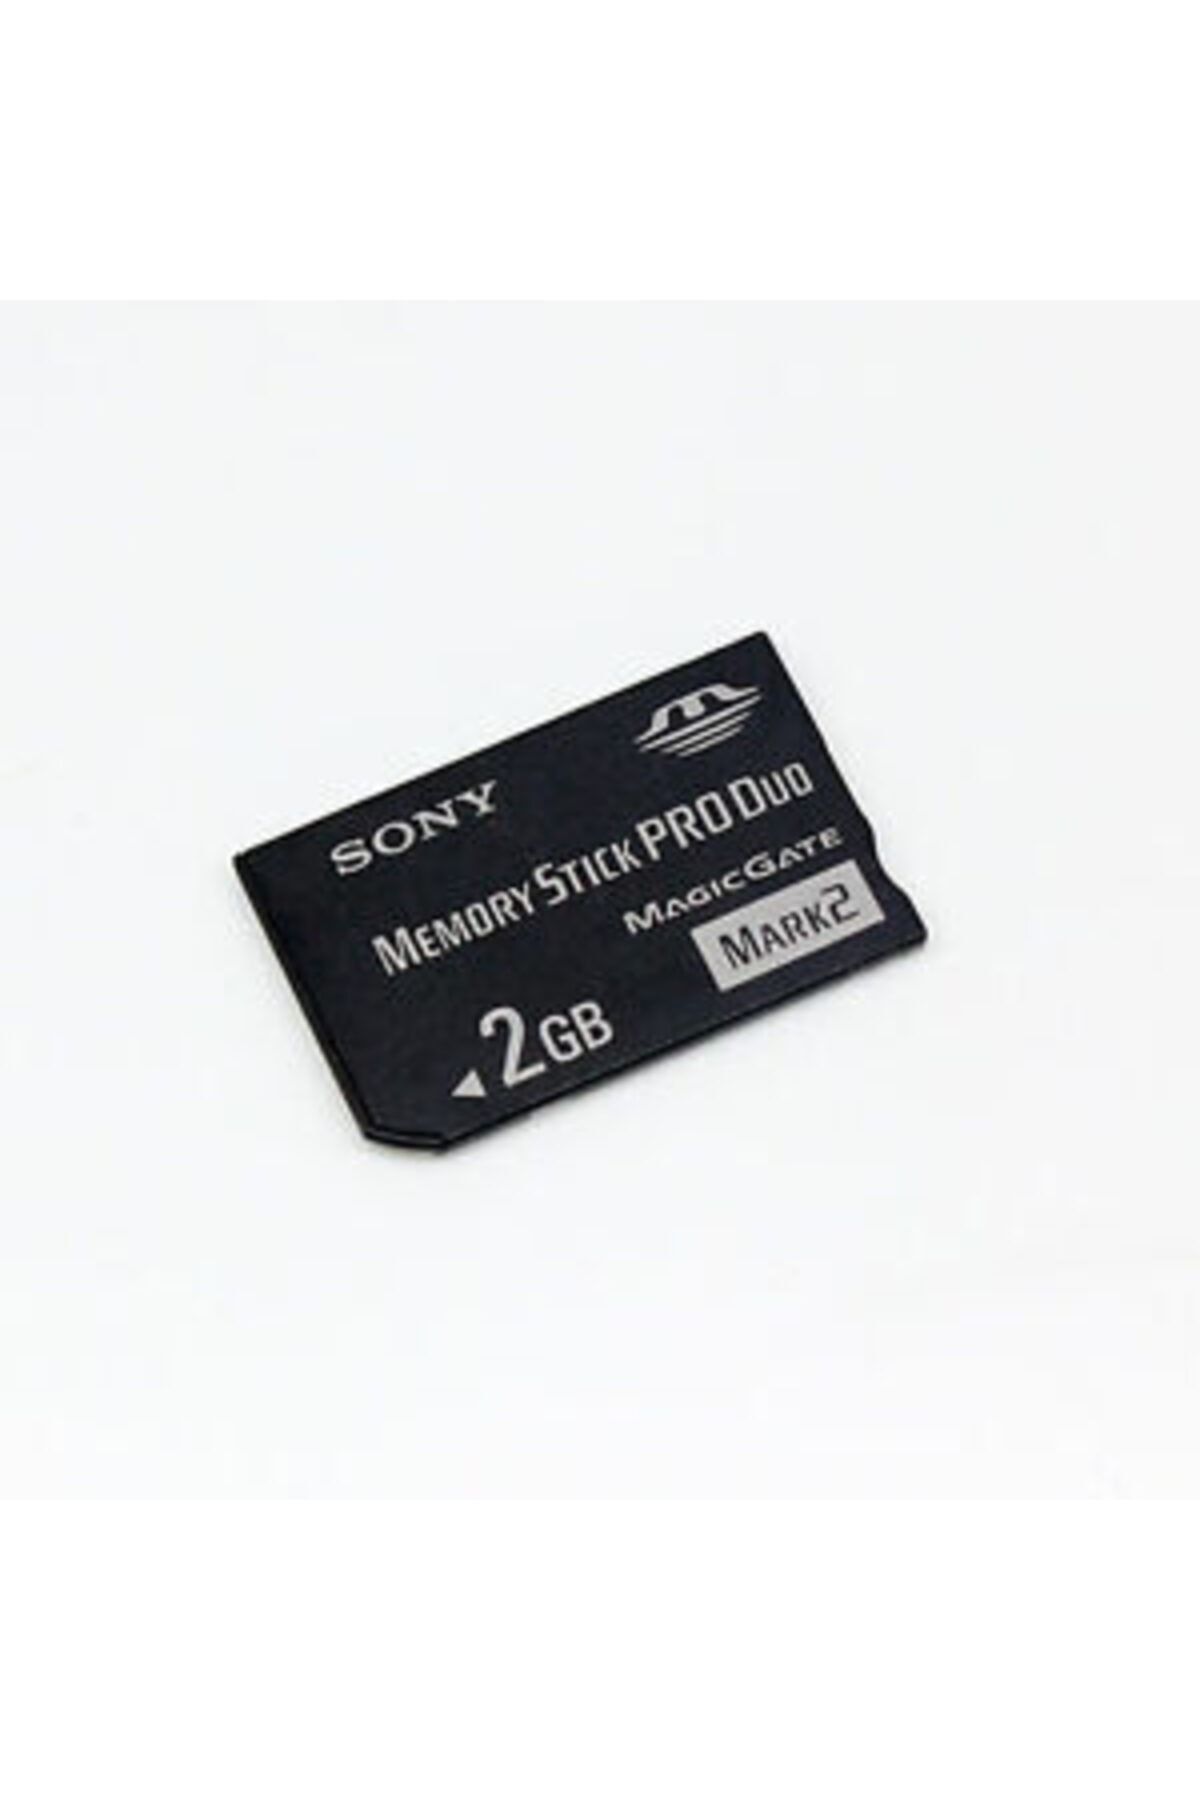 Sony Memory Stick Pro Duo 2 Gb